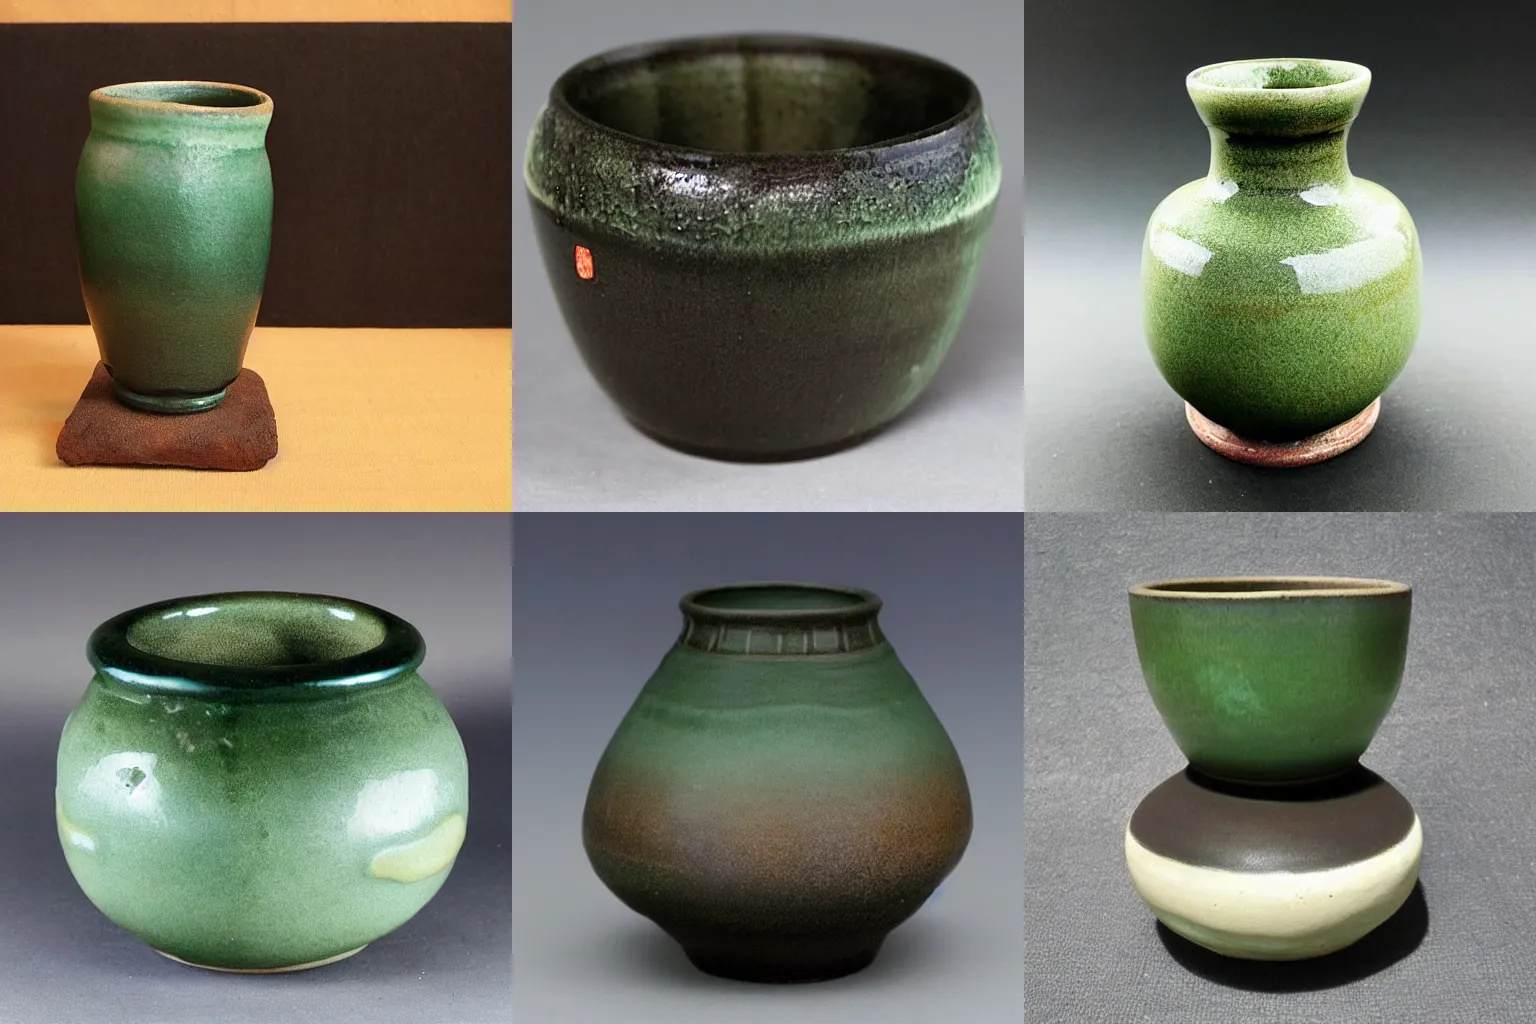 Prompt: japanese pottery, rakuware, rustic, handmade, dripping, jade glaze, zen, black background